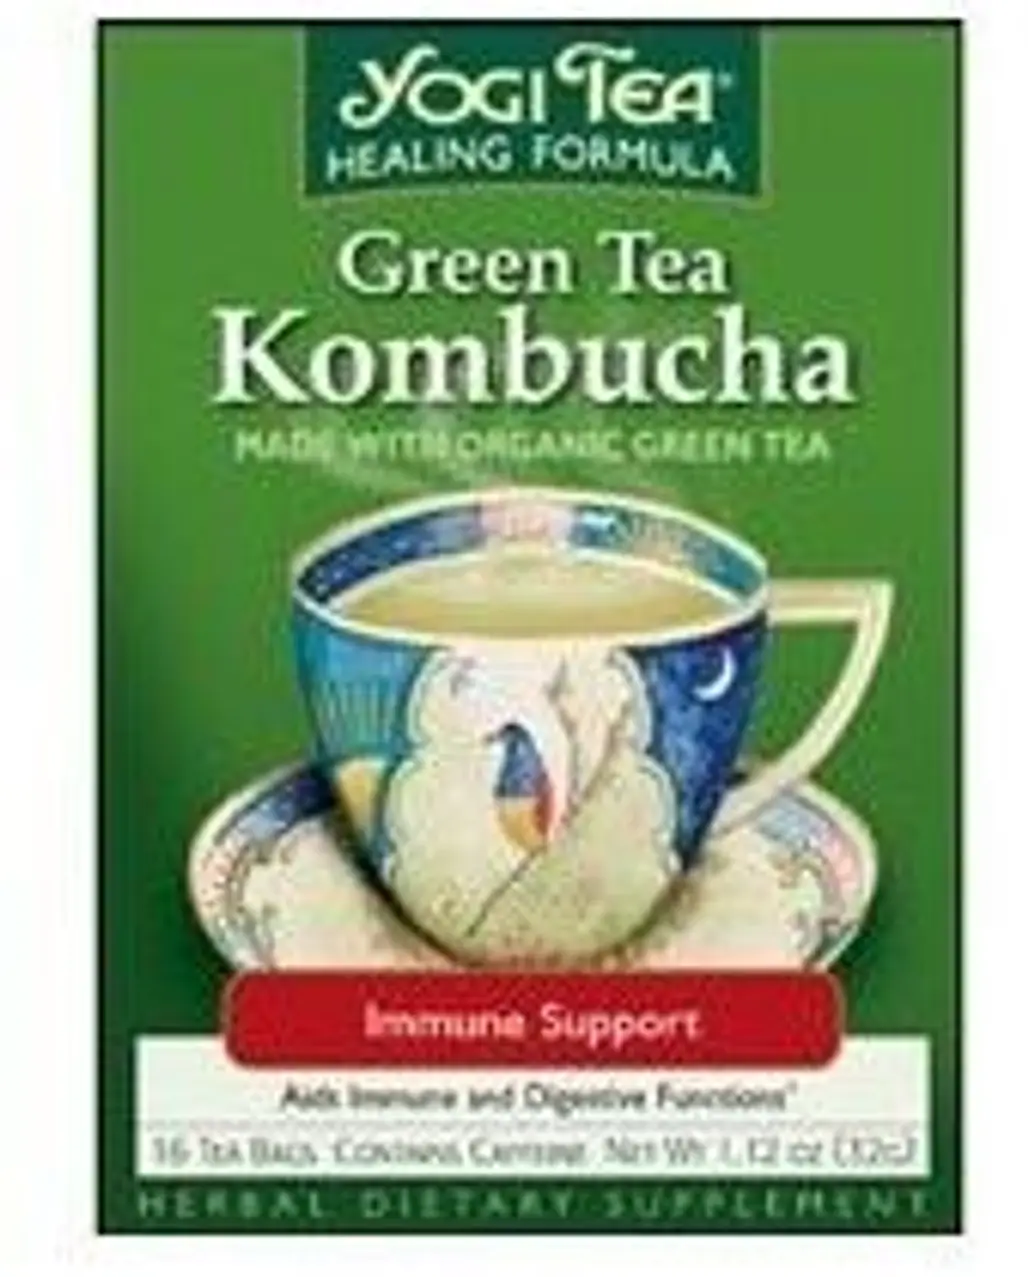 Yogi Teas Golden Temple Tea Co Green Tea Kombucha